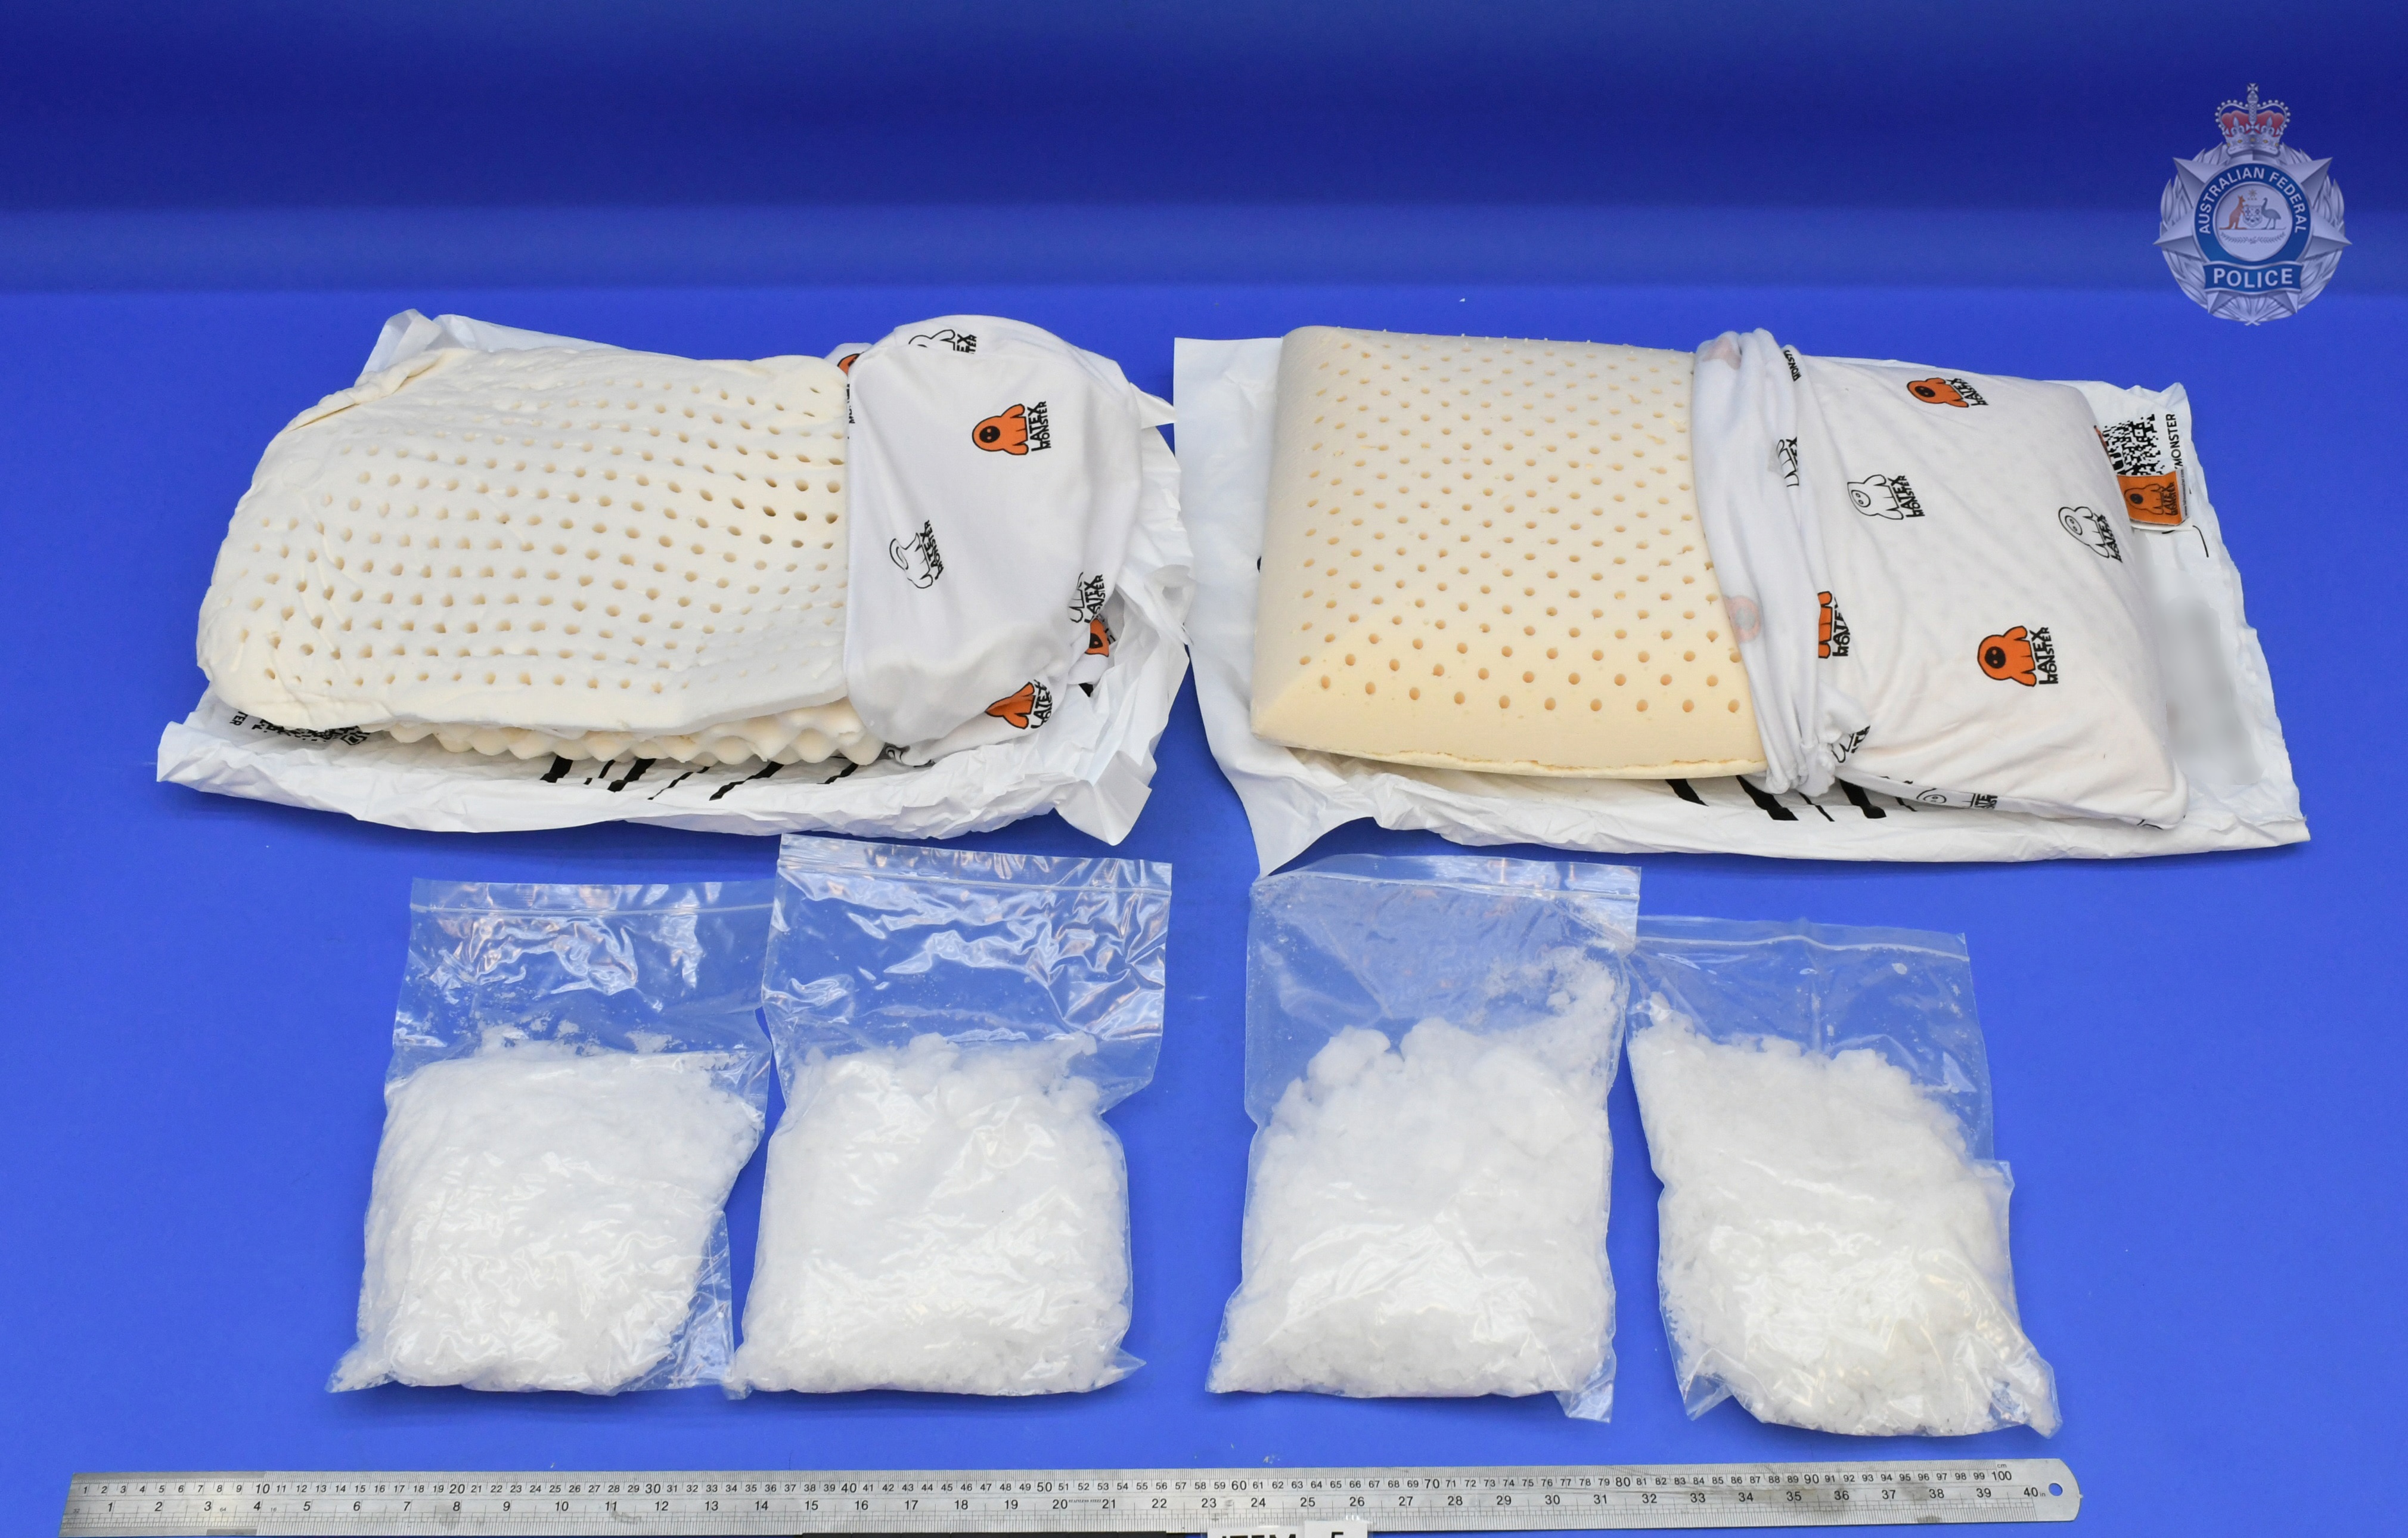 Ninety-nine kilograms of meth was hidden in a 550-kilogram shipment of latex bed pillows.